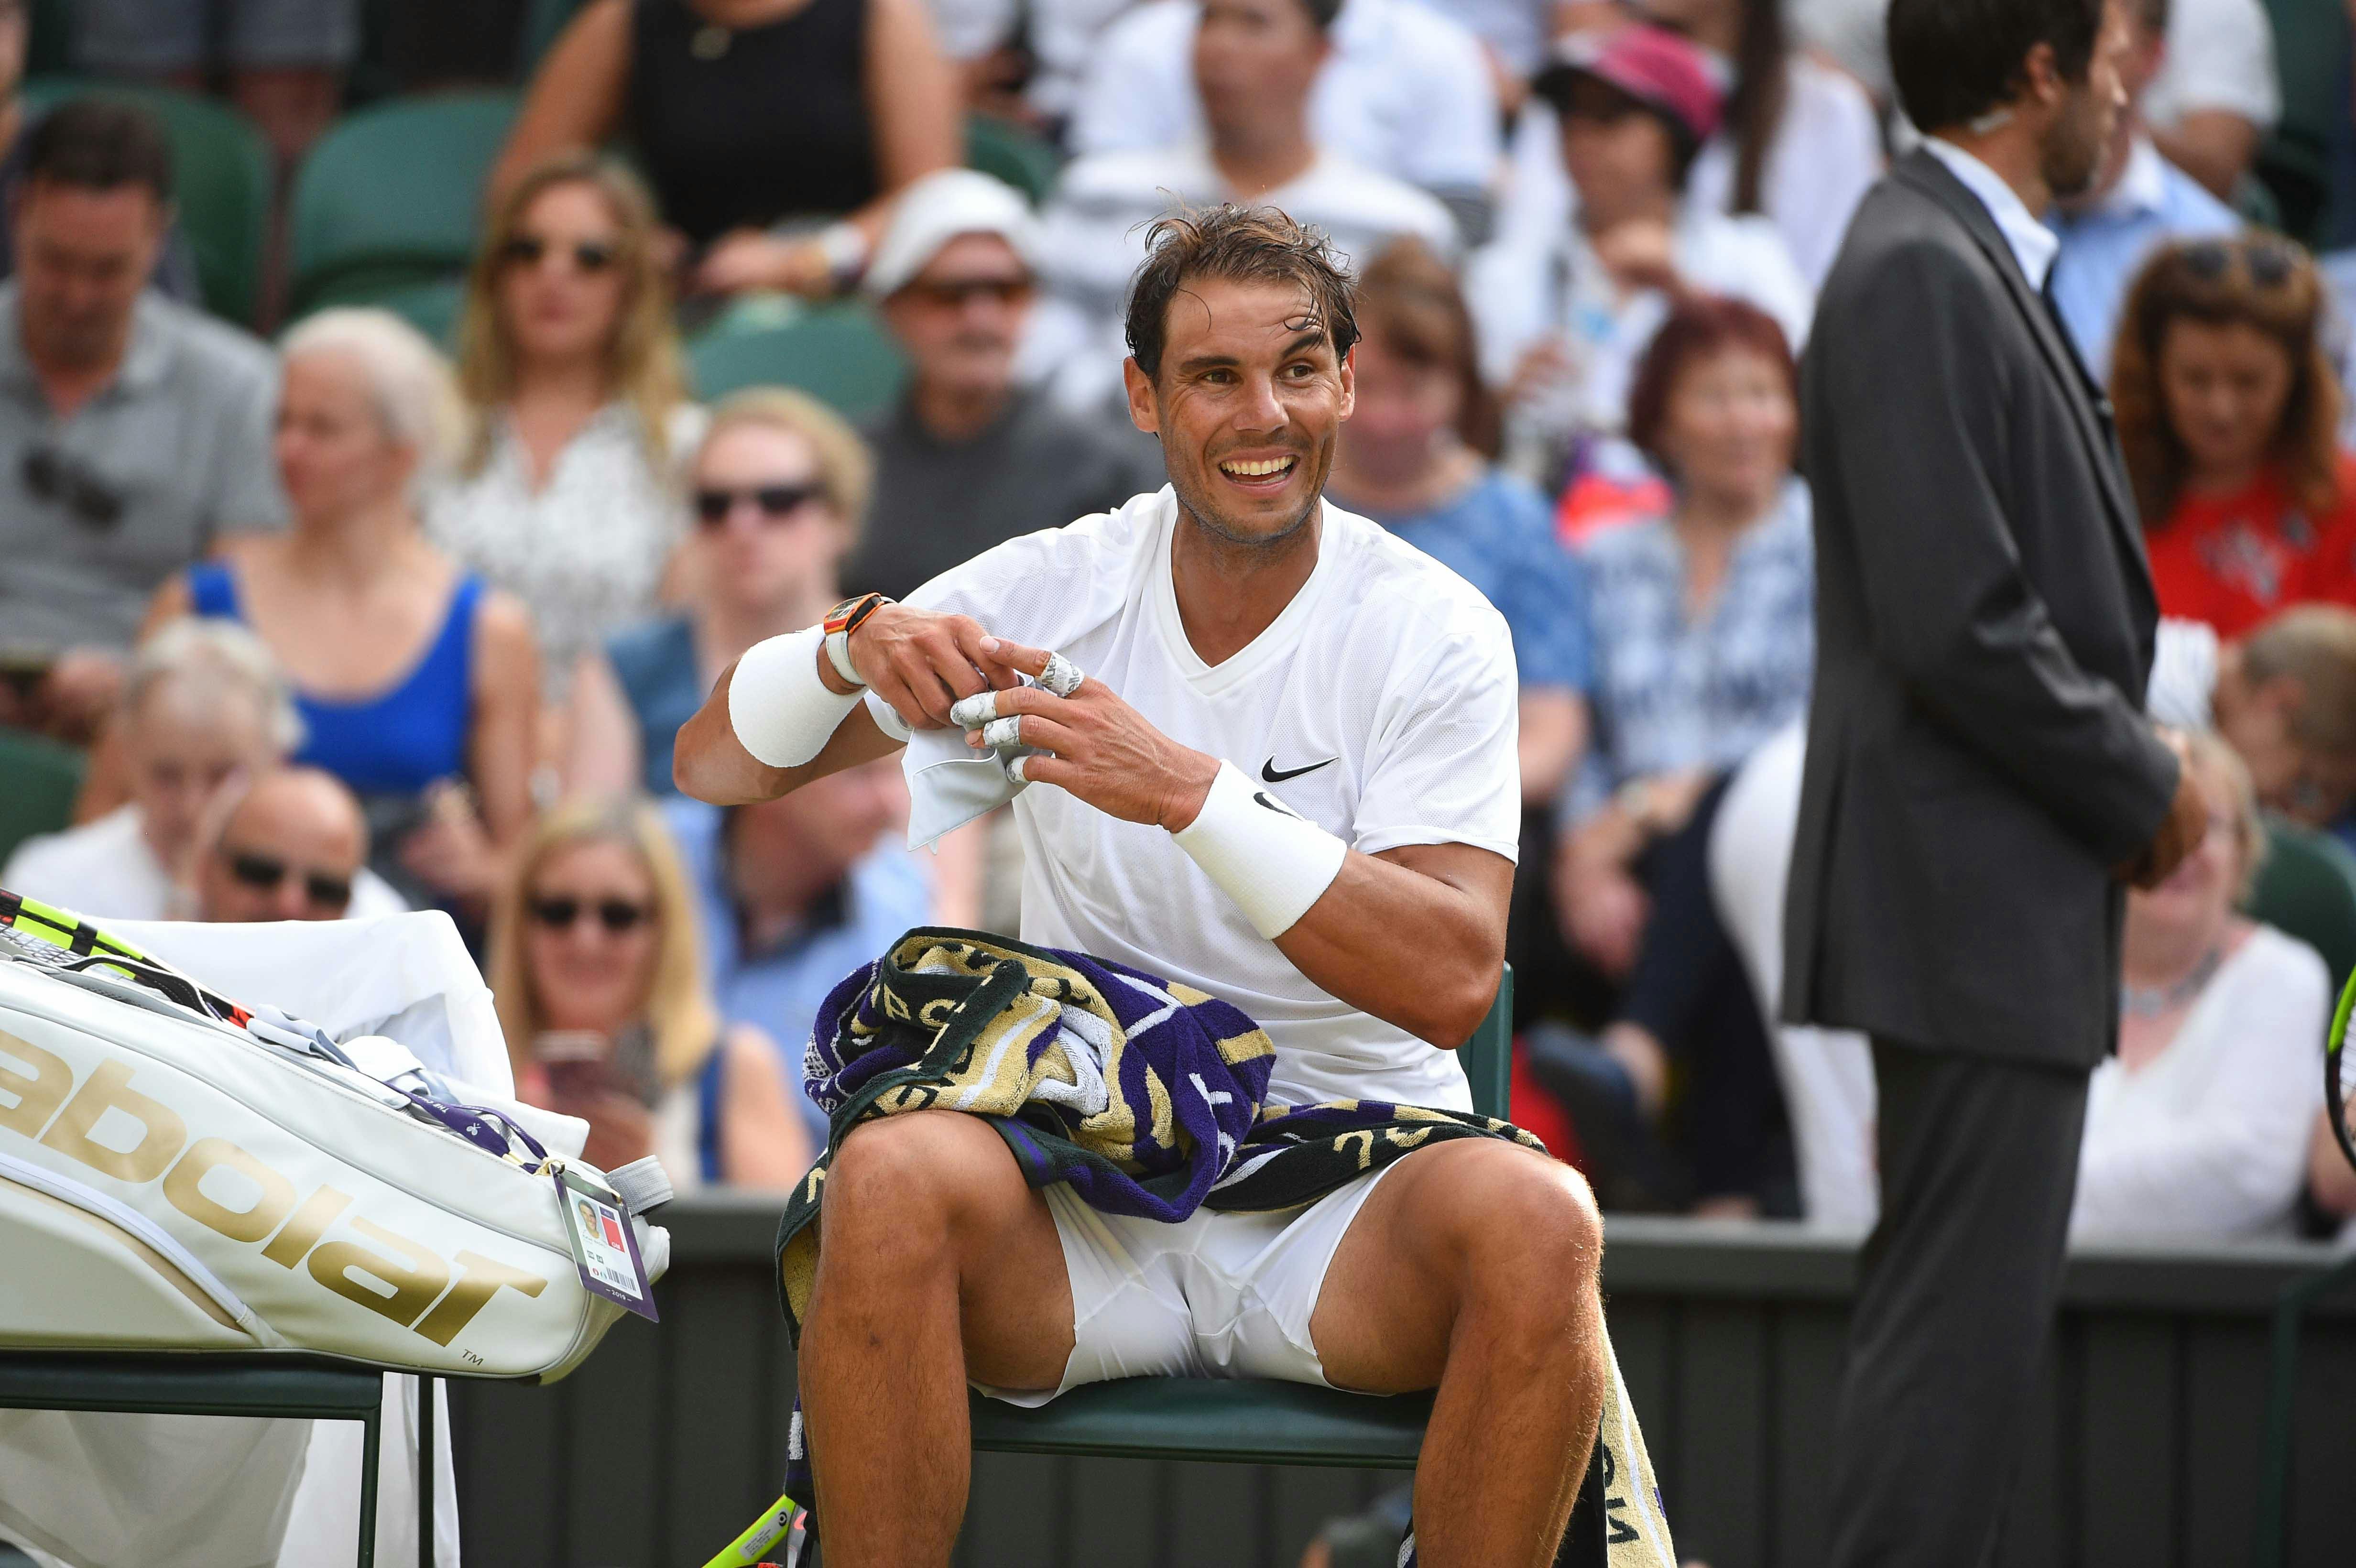 Rafael Nadal smiling during his match against Nick Kyrgios at Wimbledon 2019